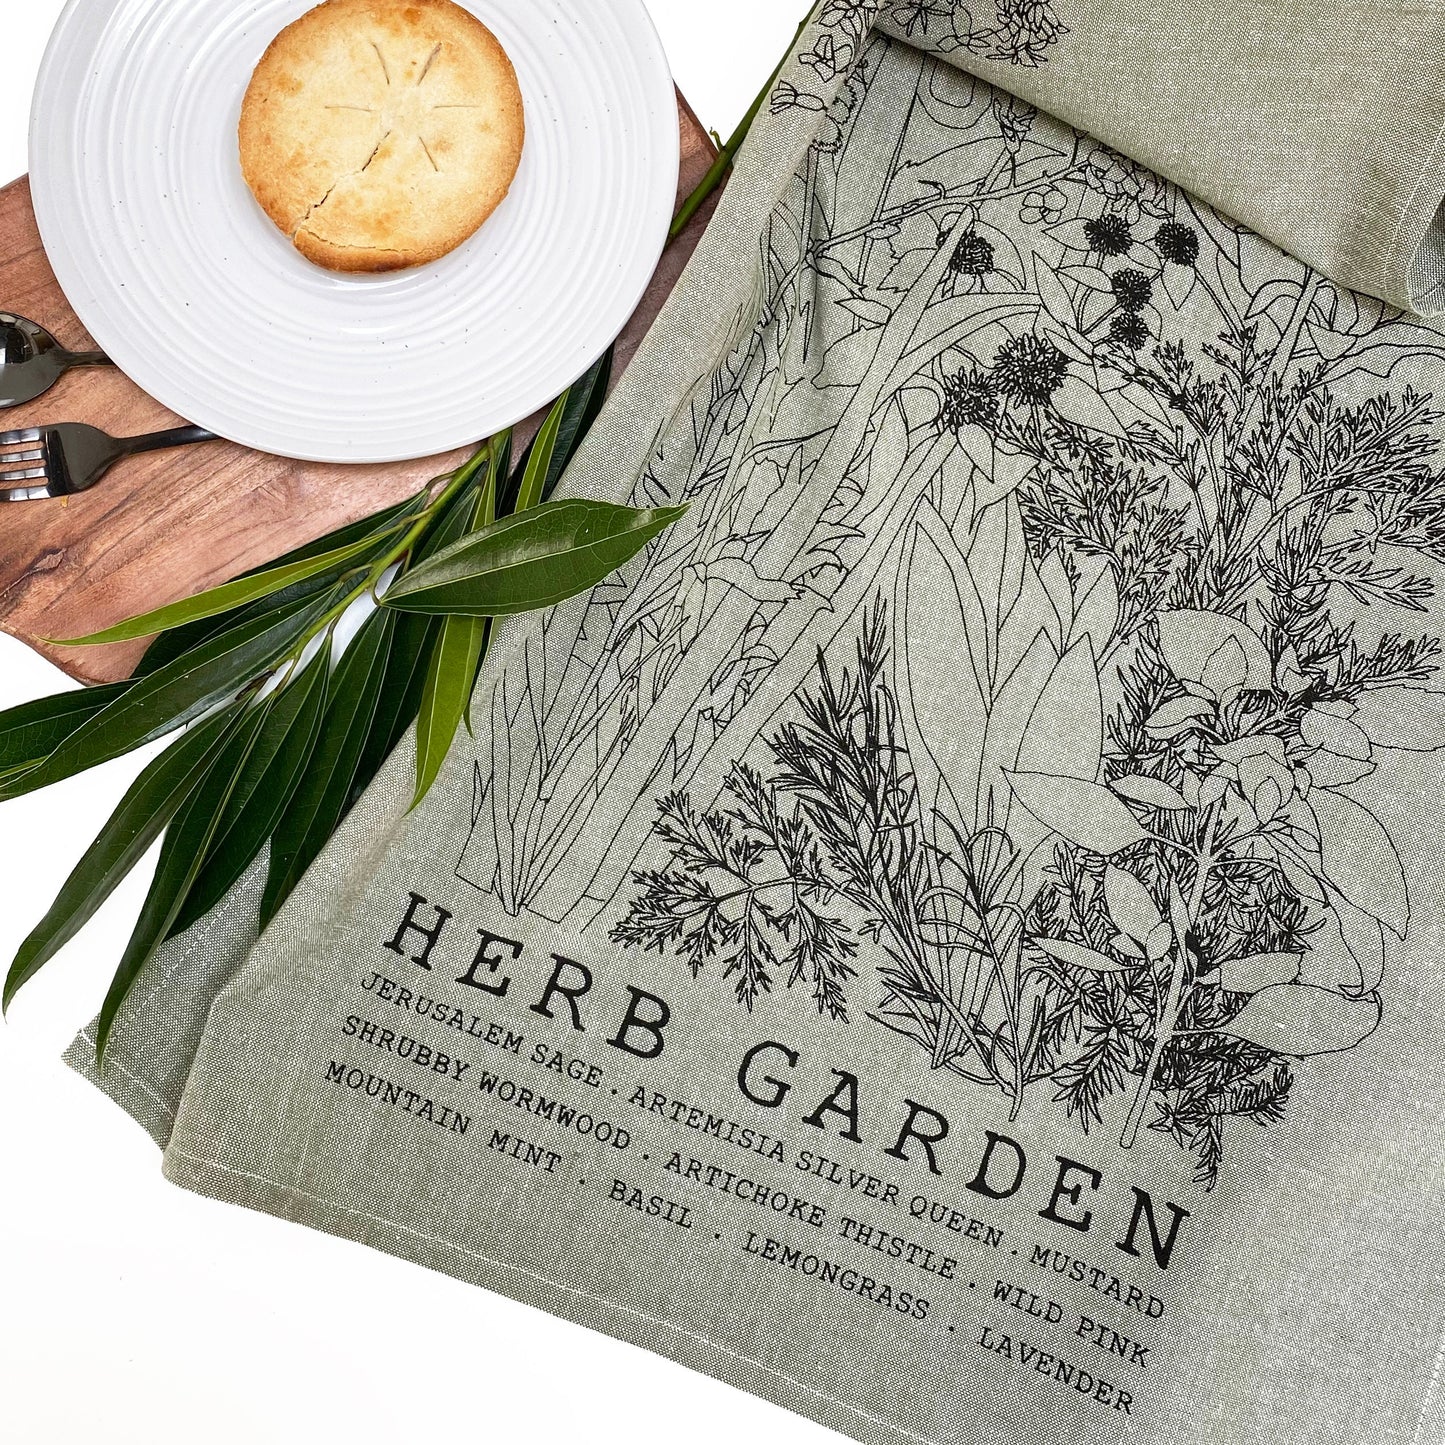 HERB GARDEN Hand Printed Artisan Tea Towel